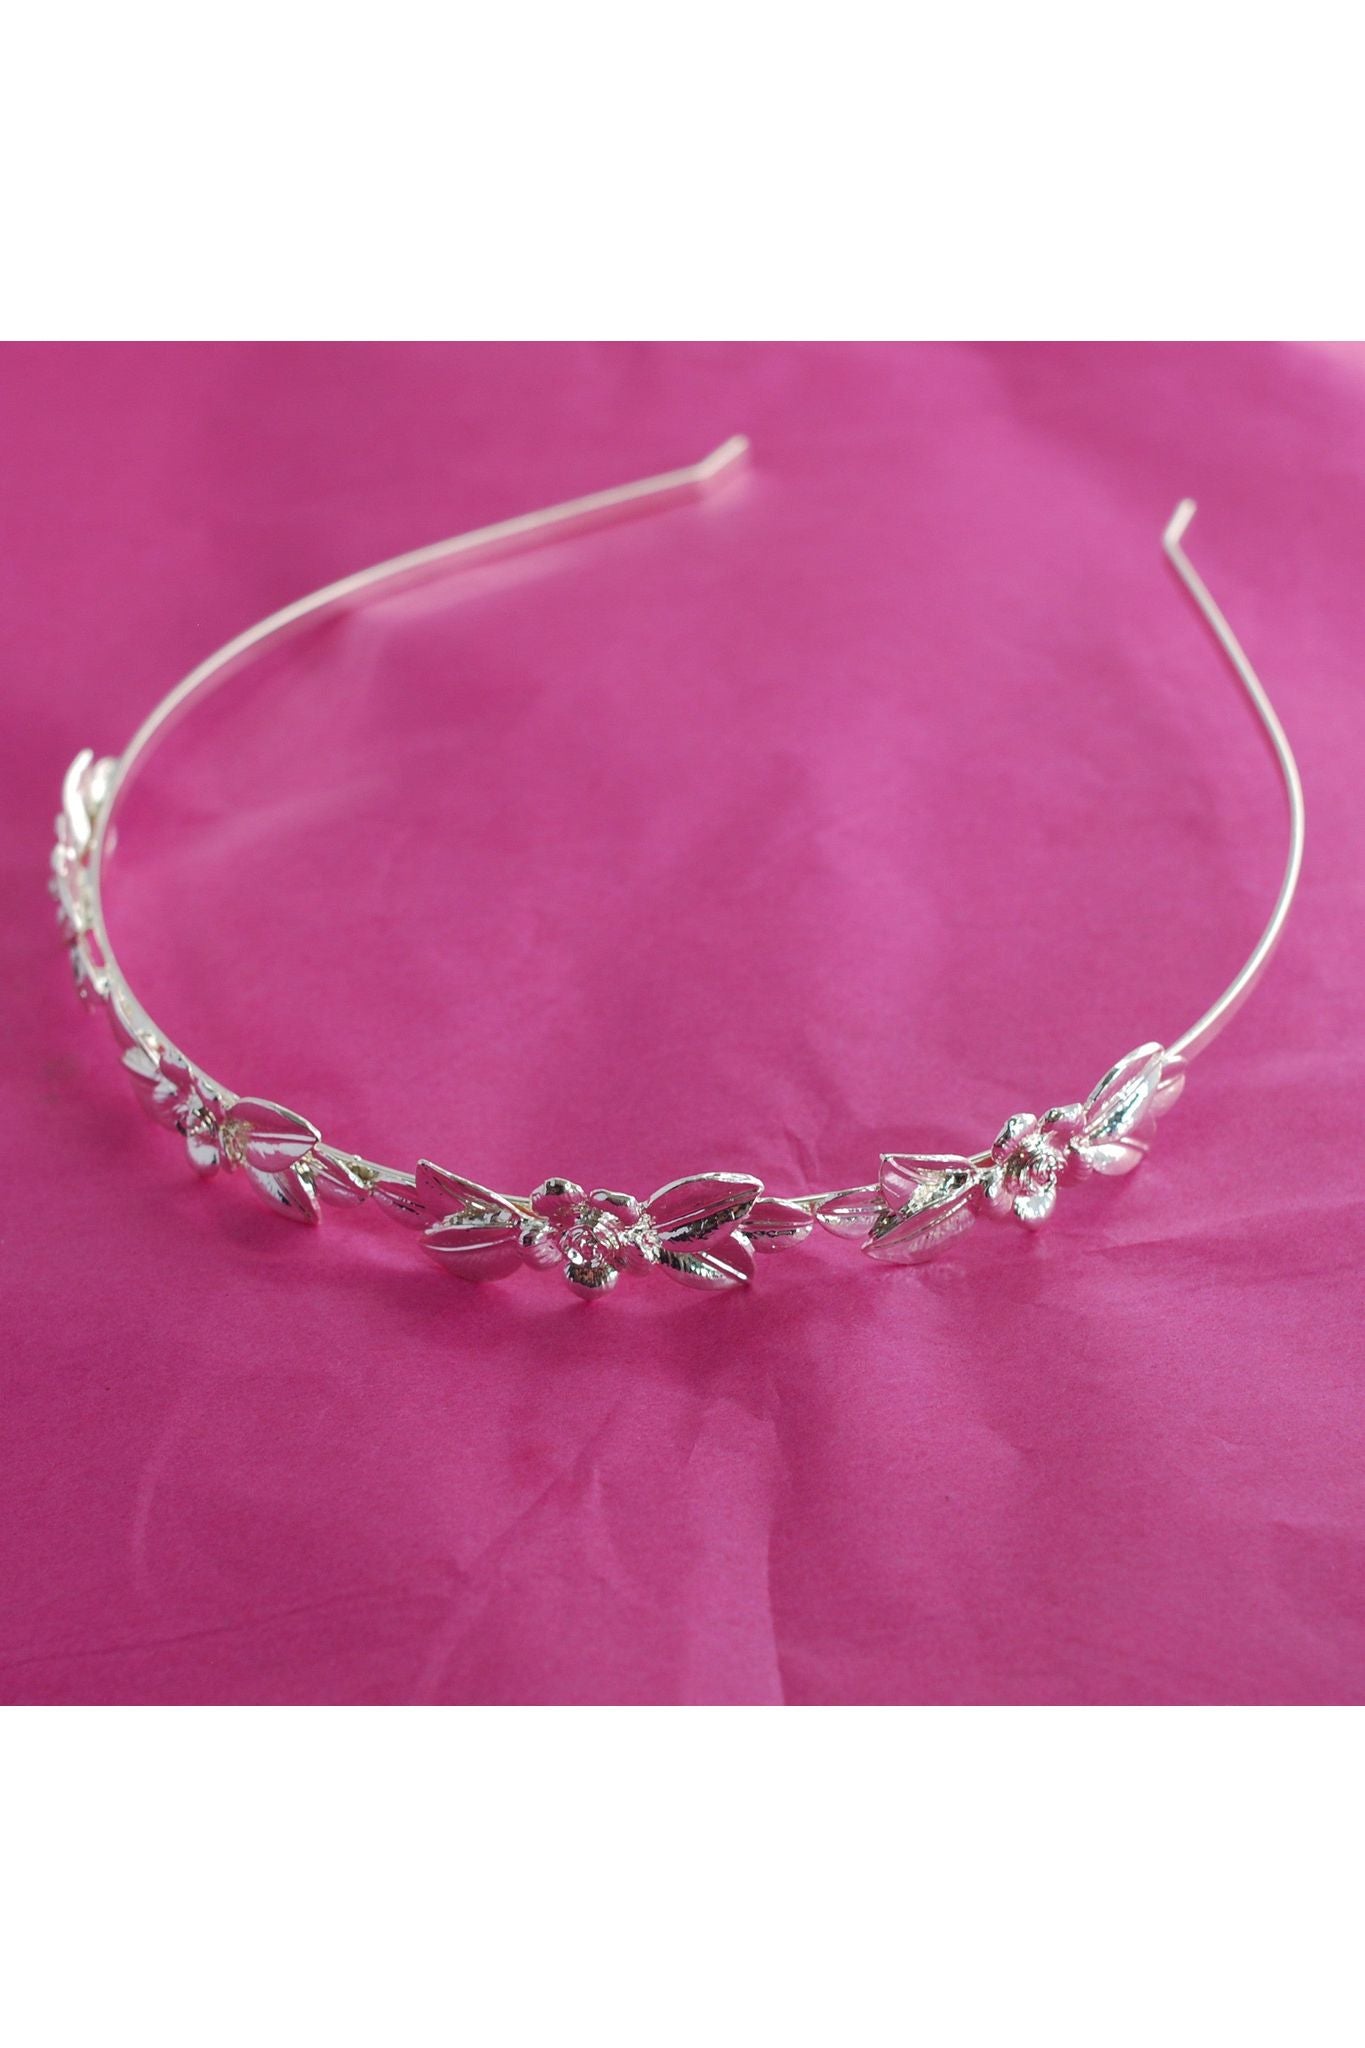 Flower Headband Wedding Hair Accessory Silver Hairband Gold Alice Band alice_flowers-gold